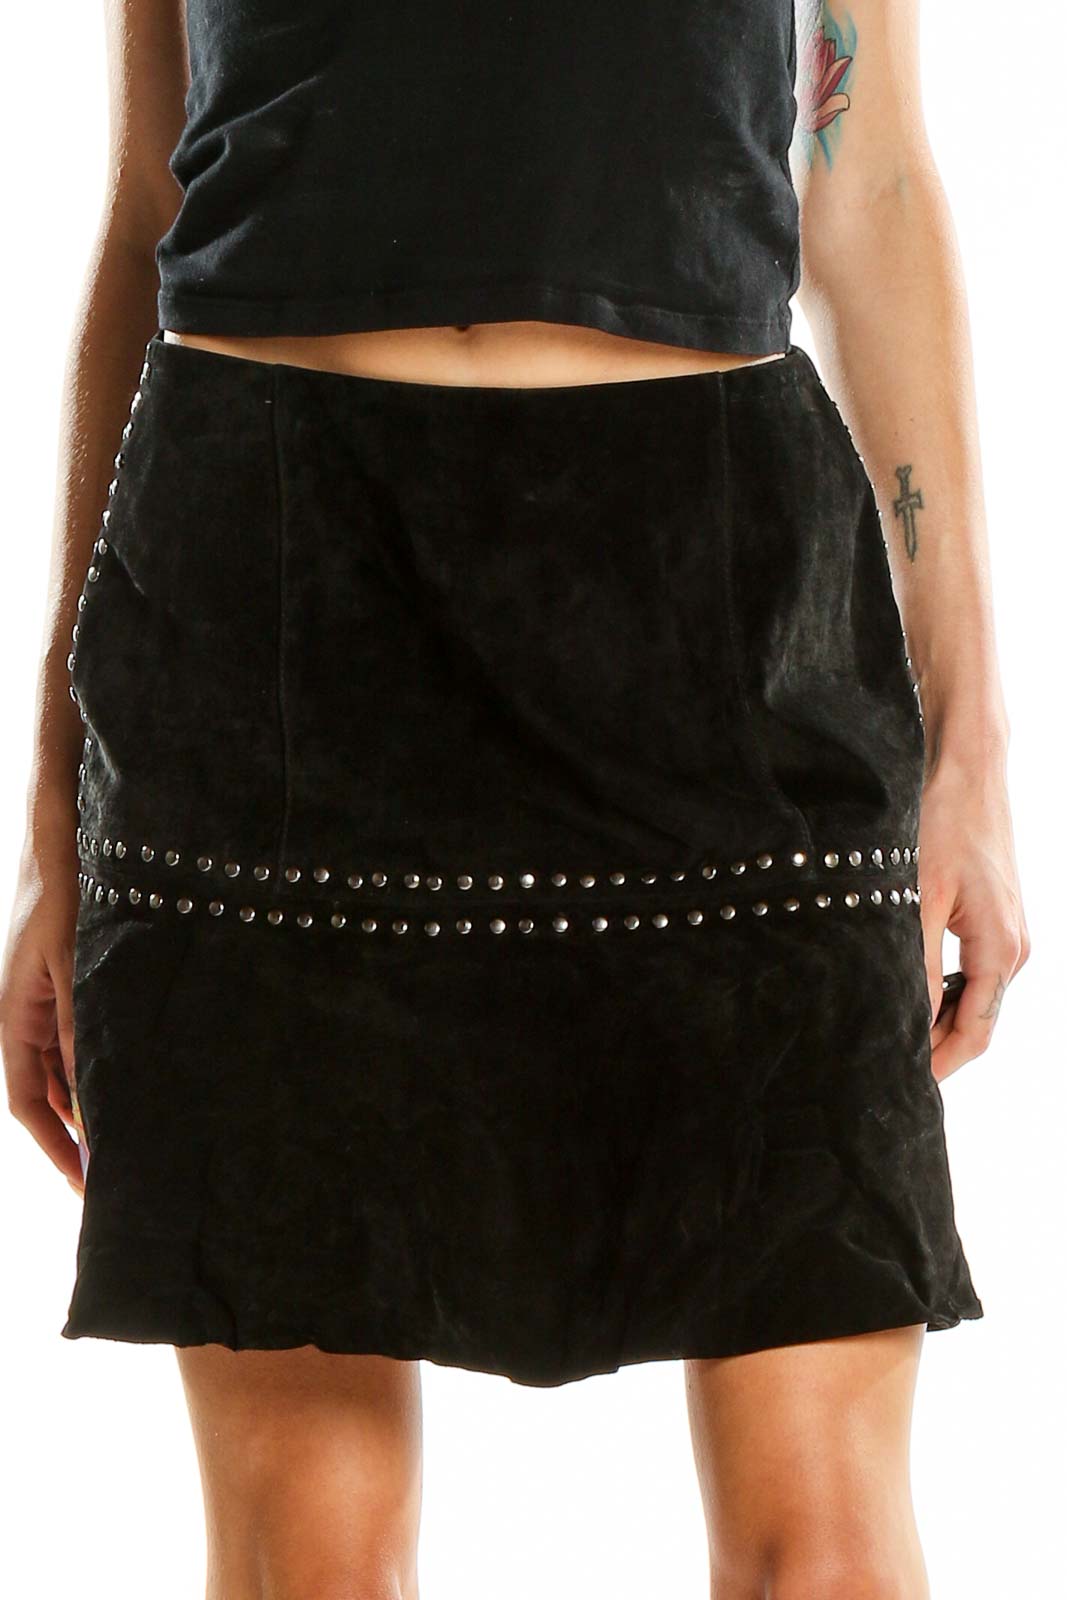 Black Leather Studded Mini Skirt Front